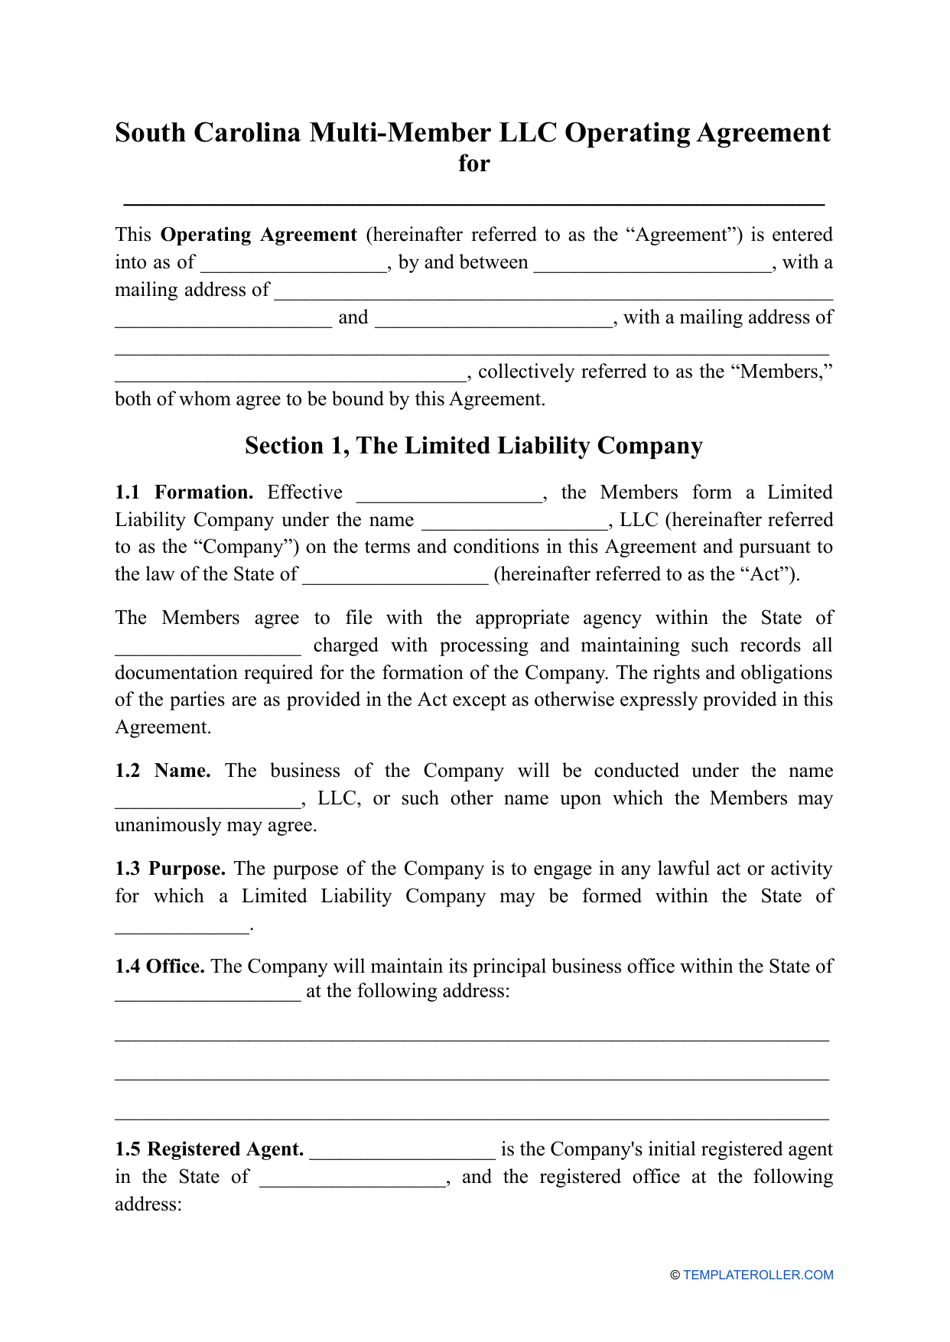 Multi-Member LLC Operating Agreement Template - South Carolina, Page 1